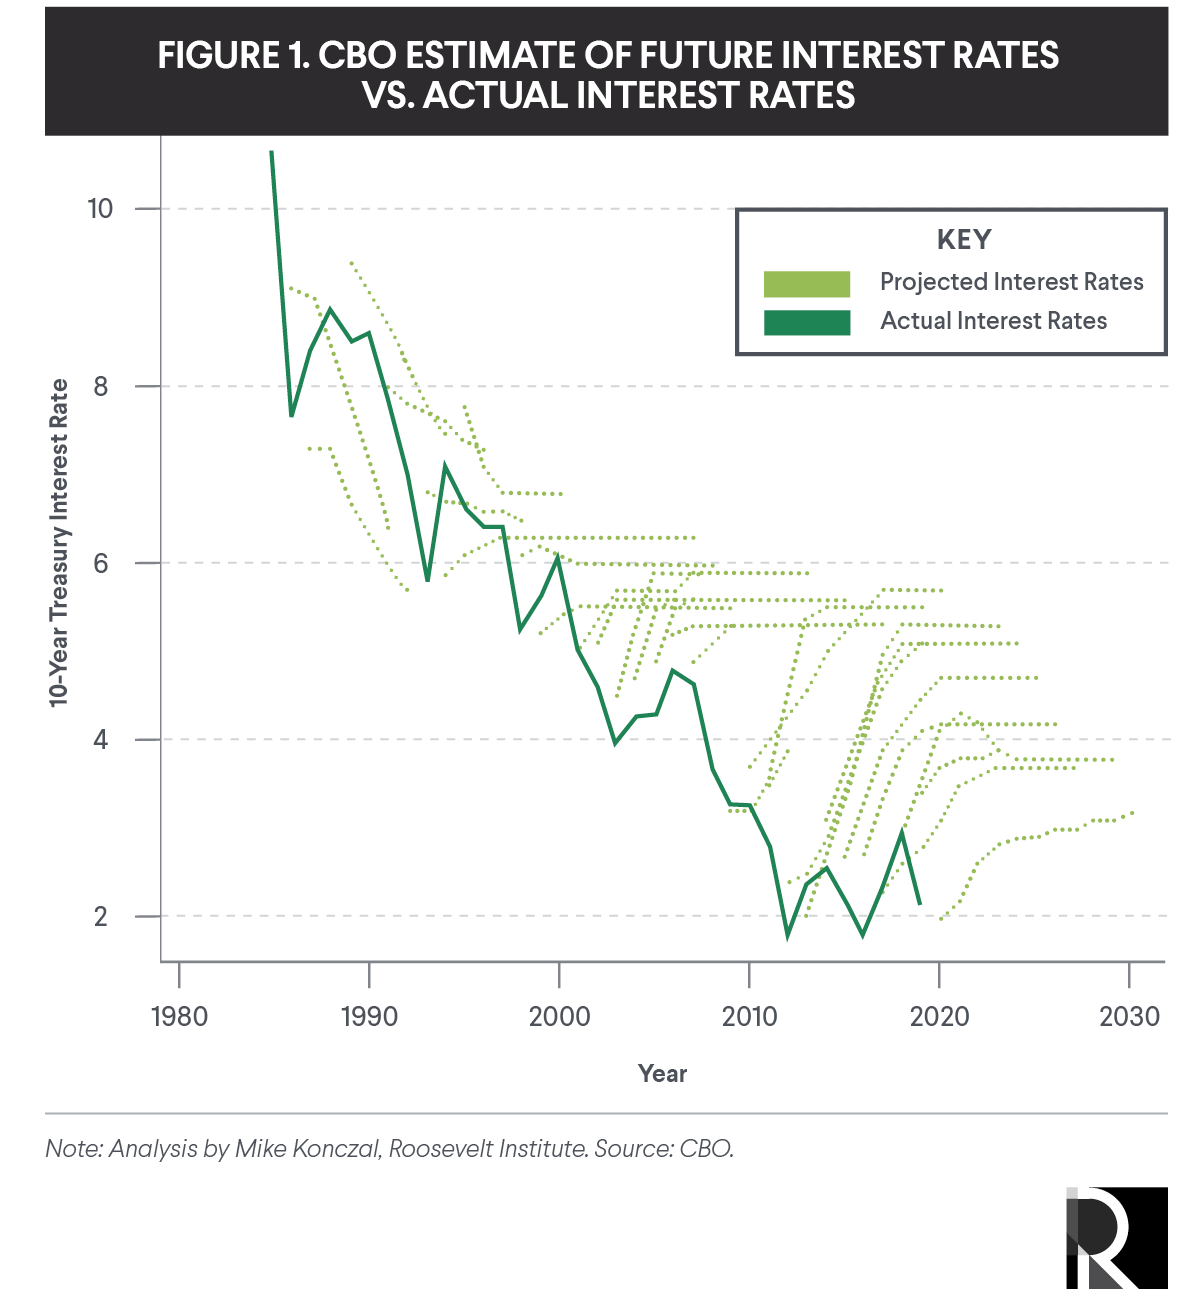 Graph showing CBO Estimate of Future Interest Rates vs. Actual Interest Rates